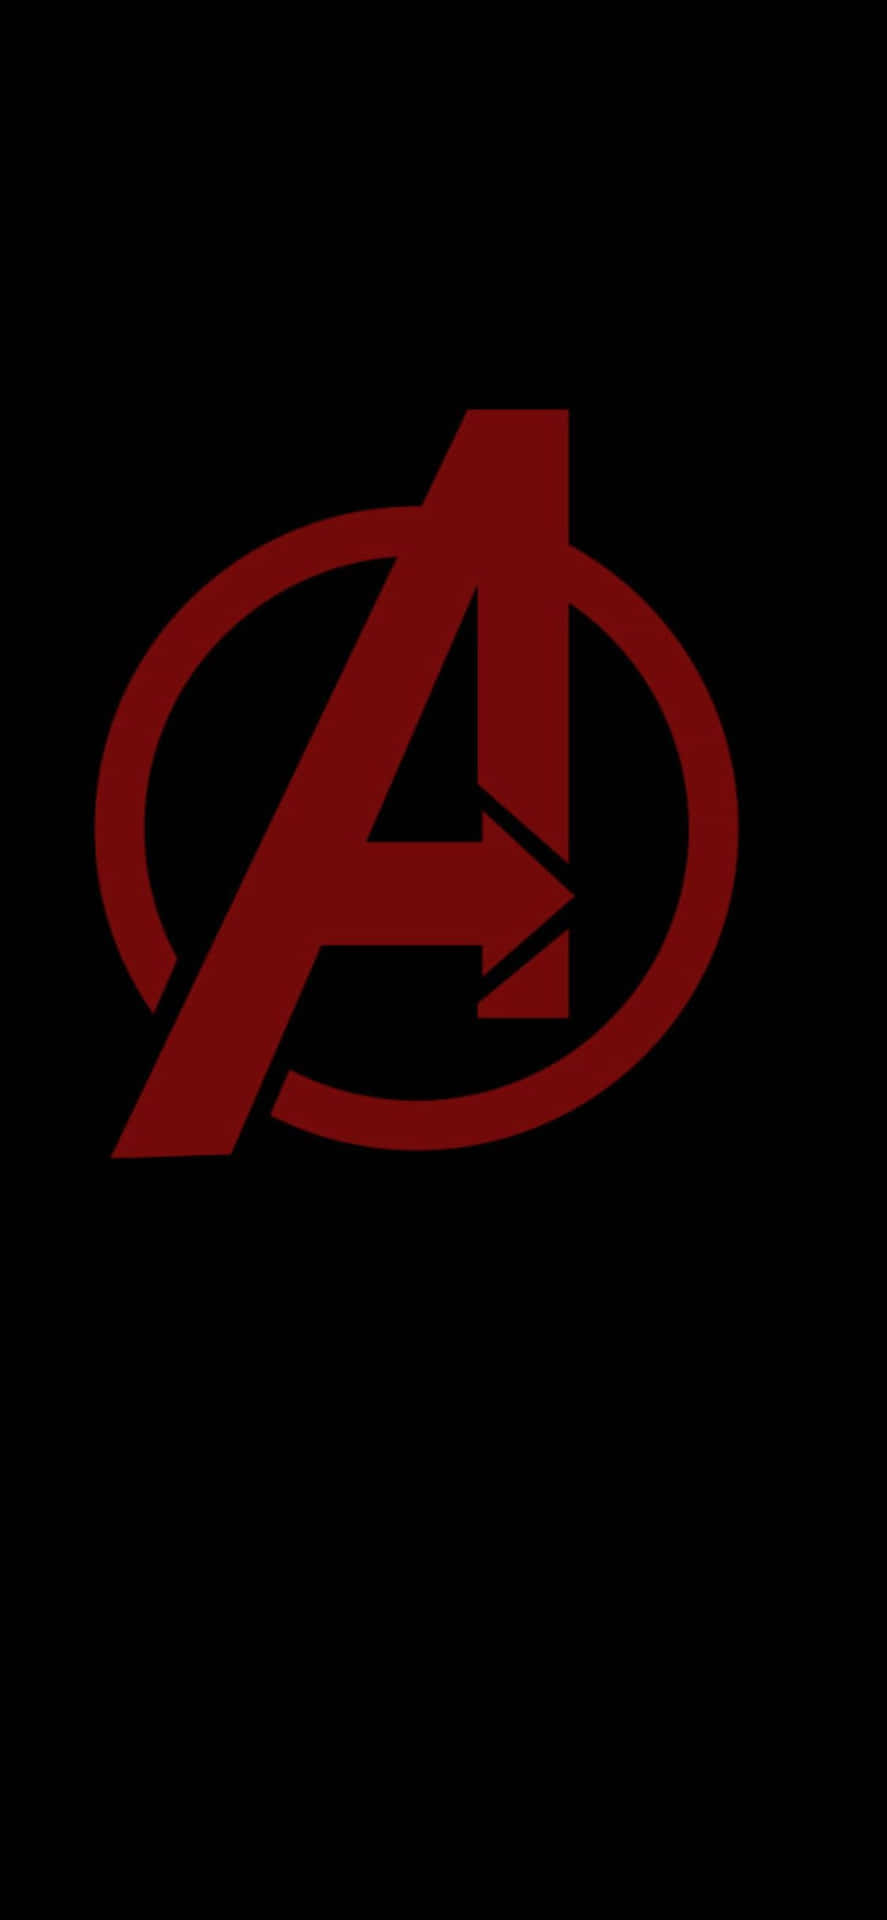 Dark Minimalist iPhone XS Avengers Logo Background